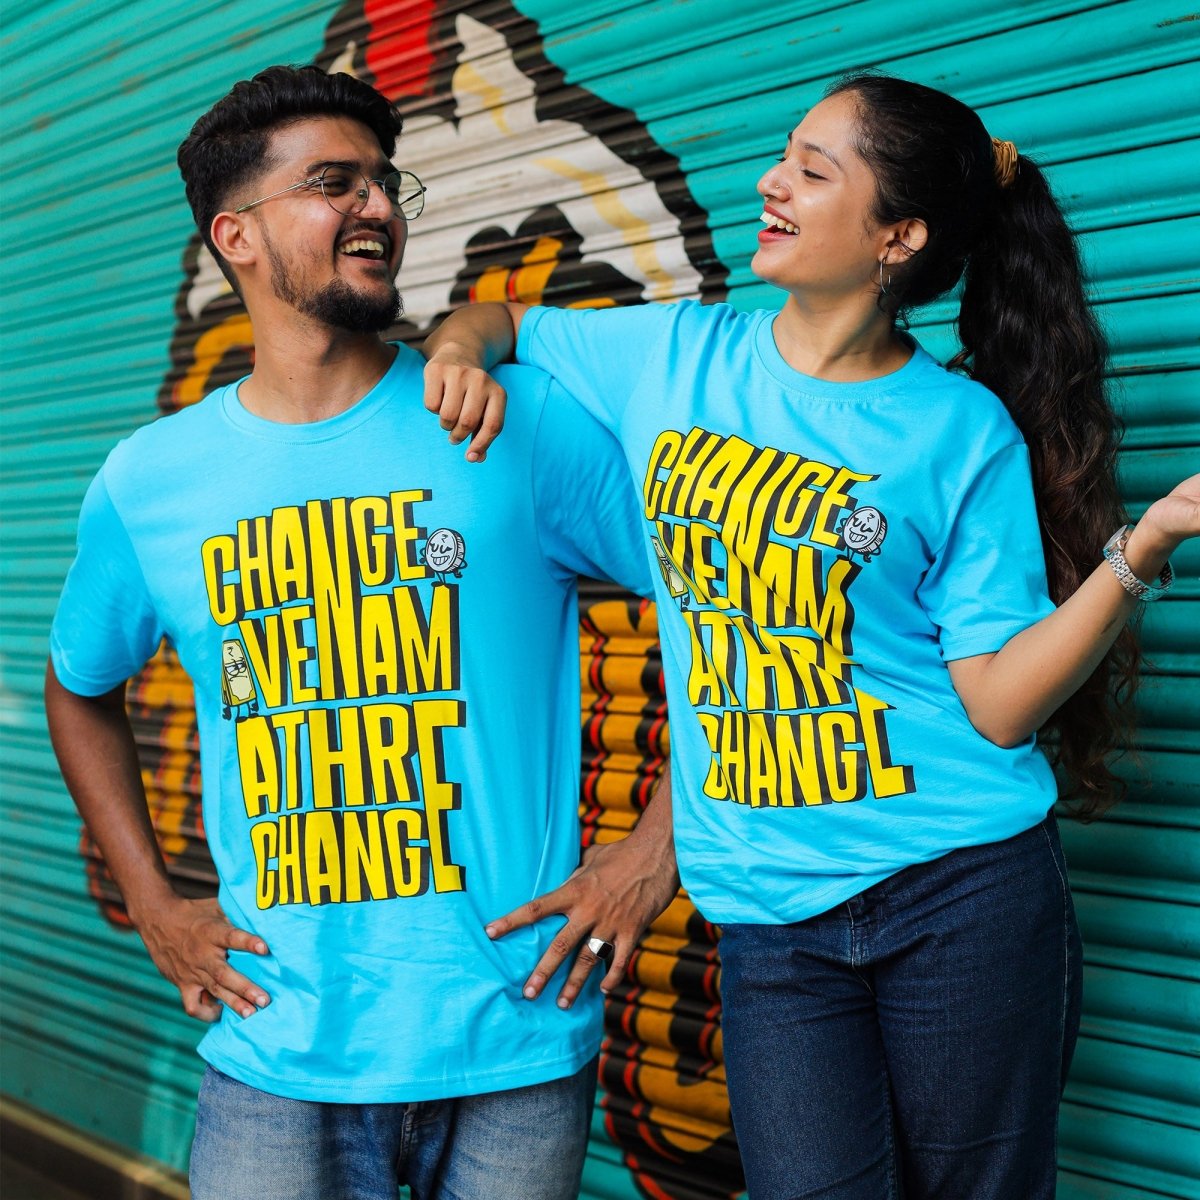 Change Venam Print T-Shirt Couples - Mydesignation